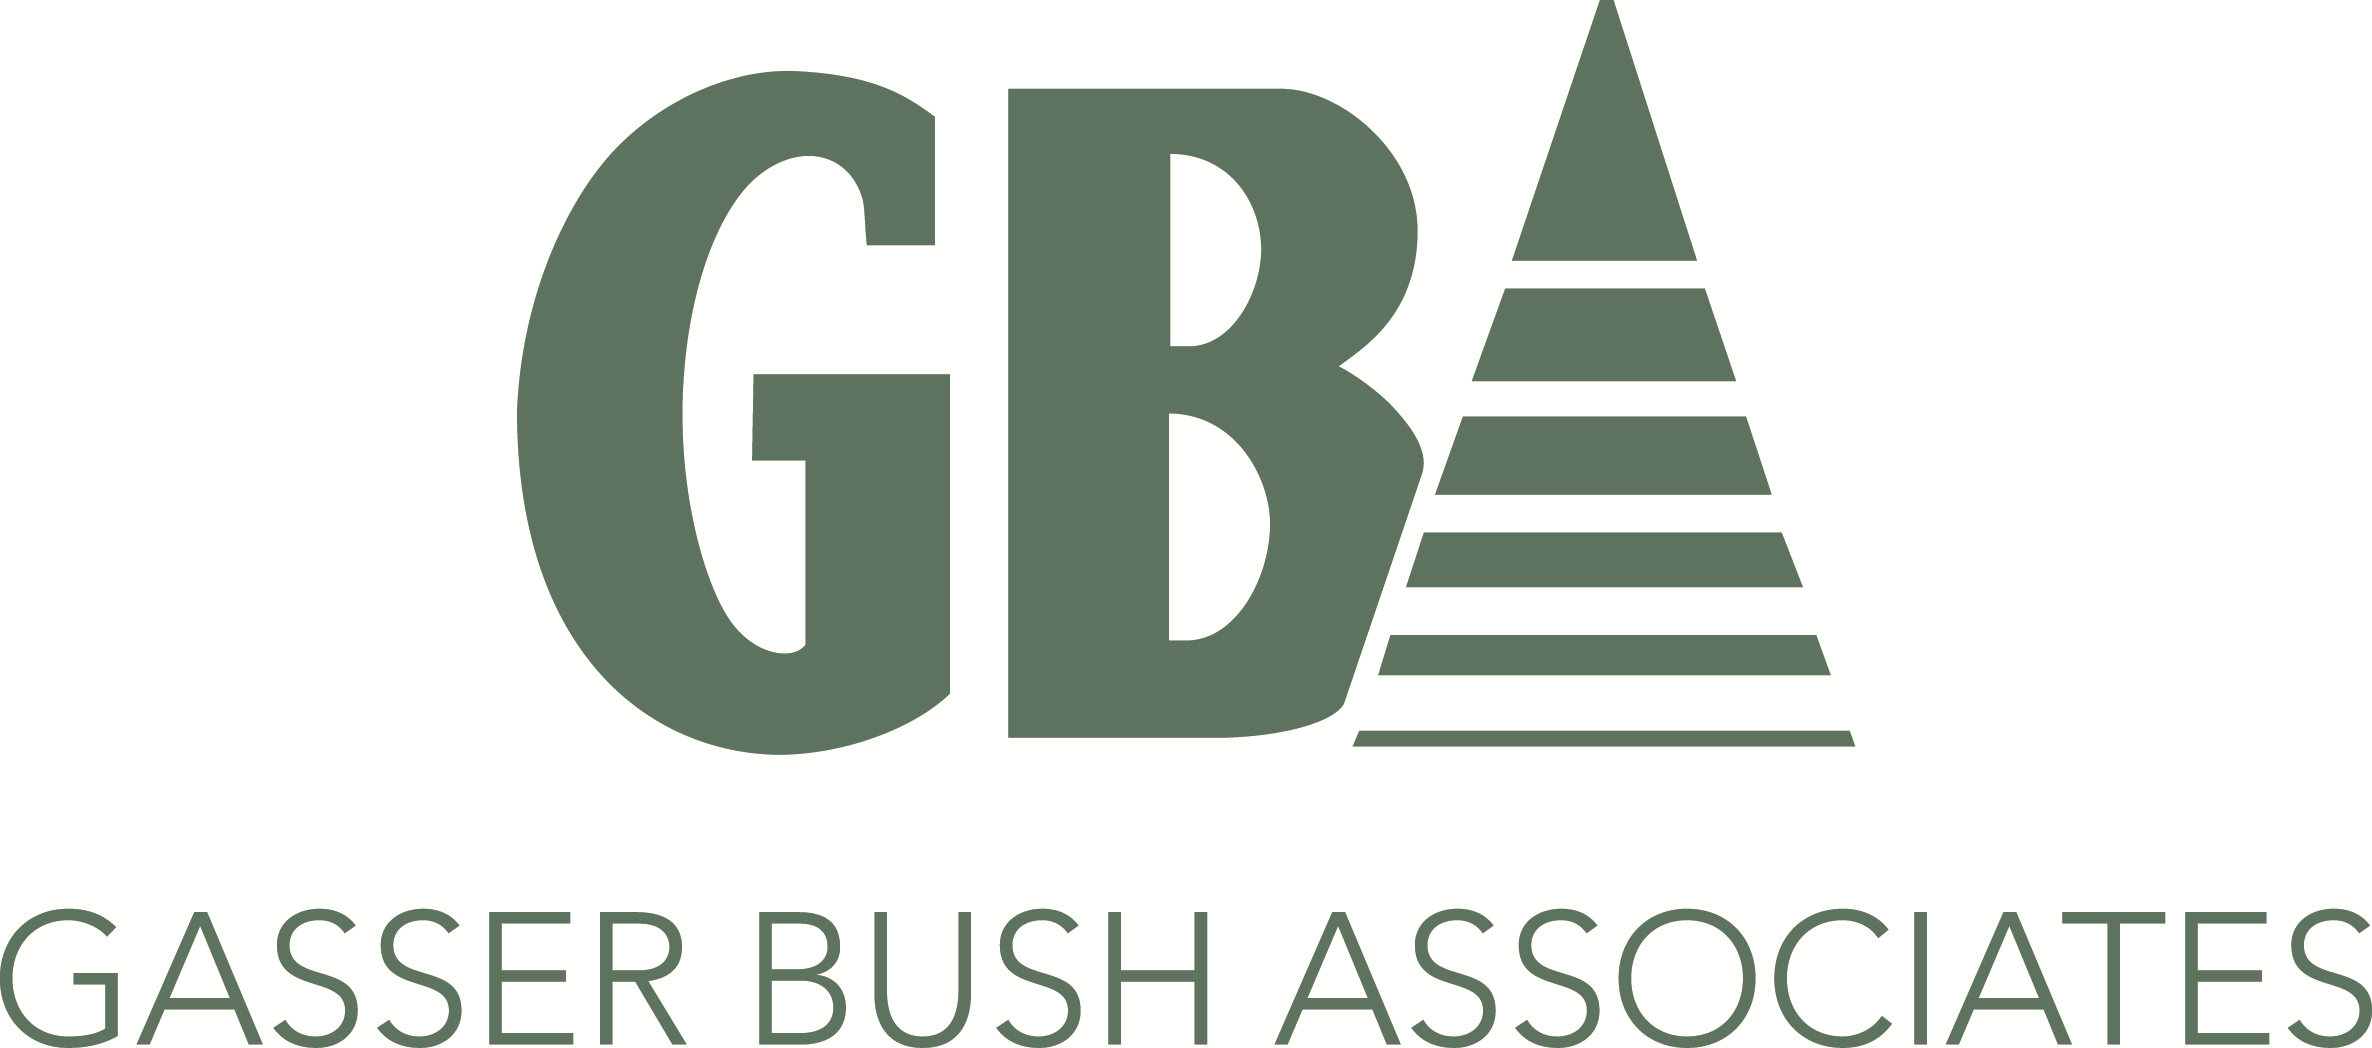 Gasser Bush Associates Company Logo